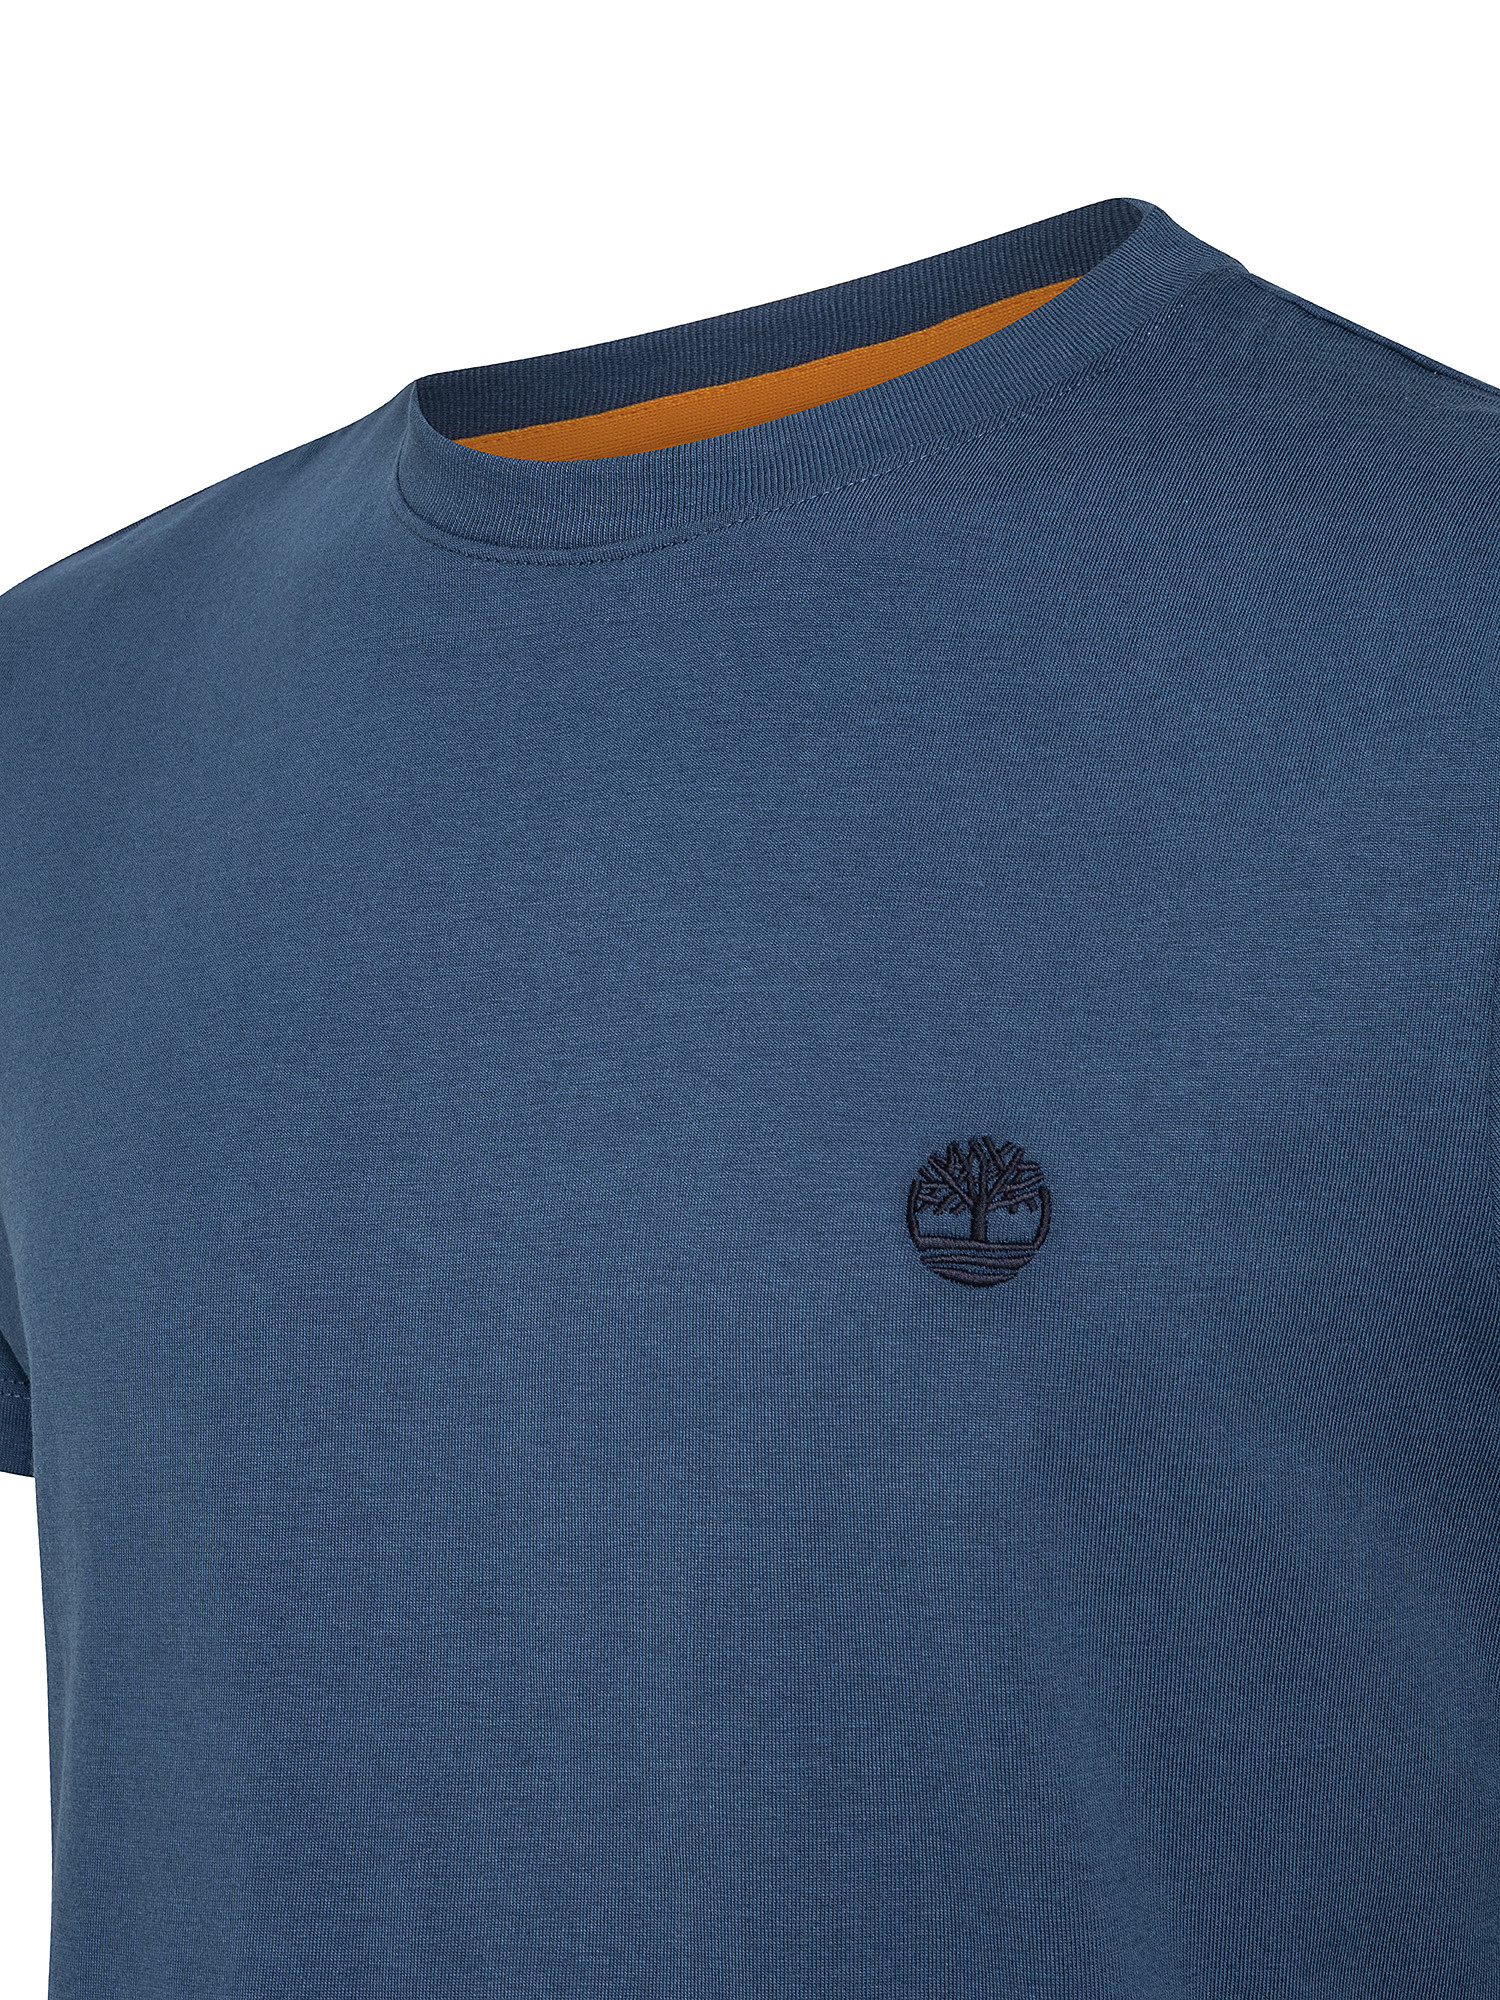 T-shirt da Uomo Dunstan River, Blu, large image number 2